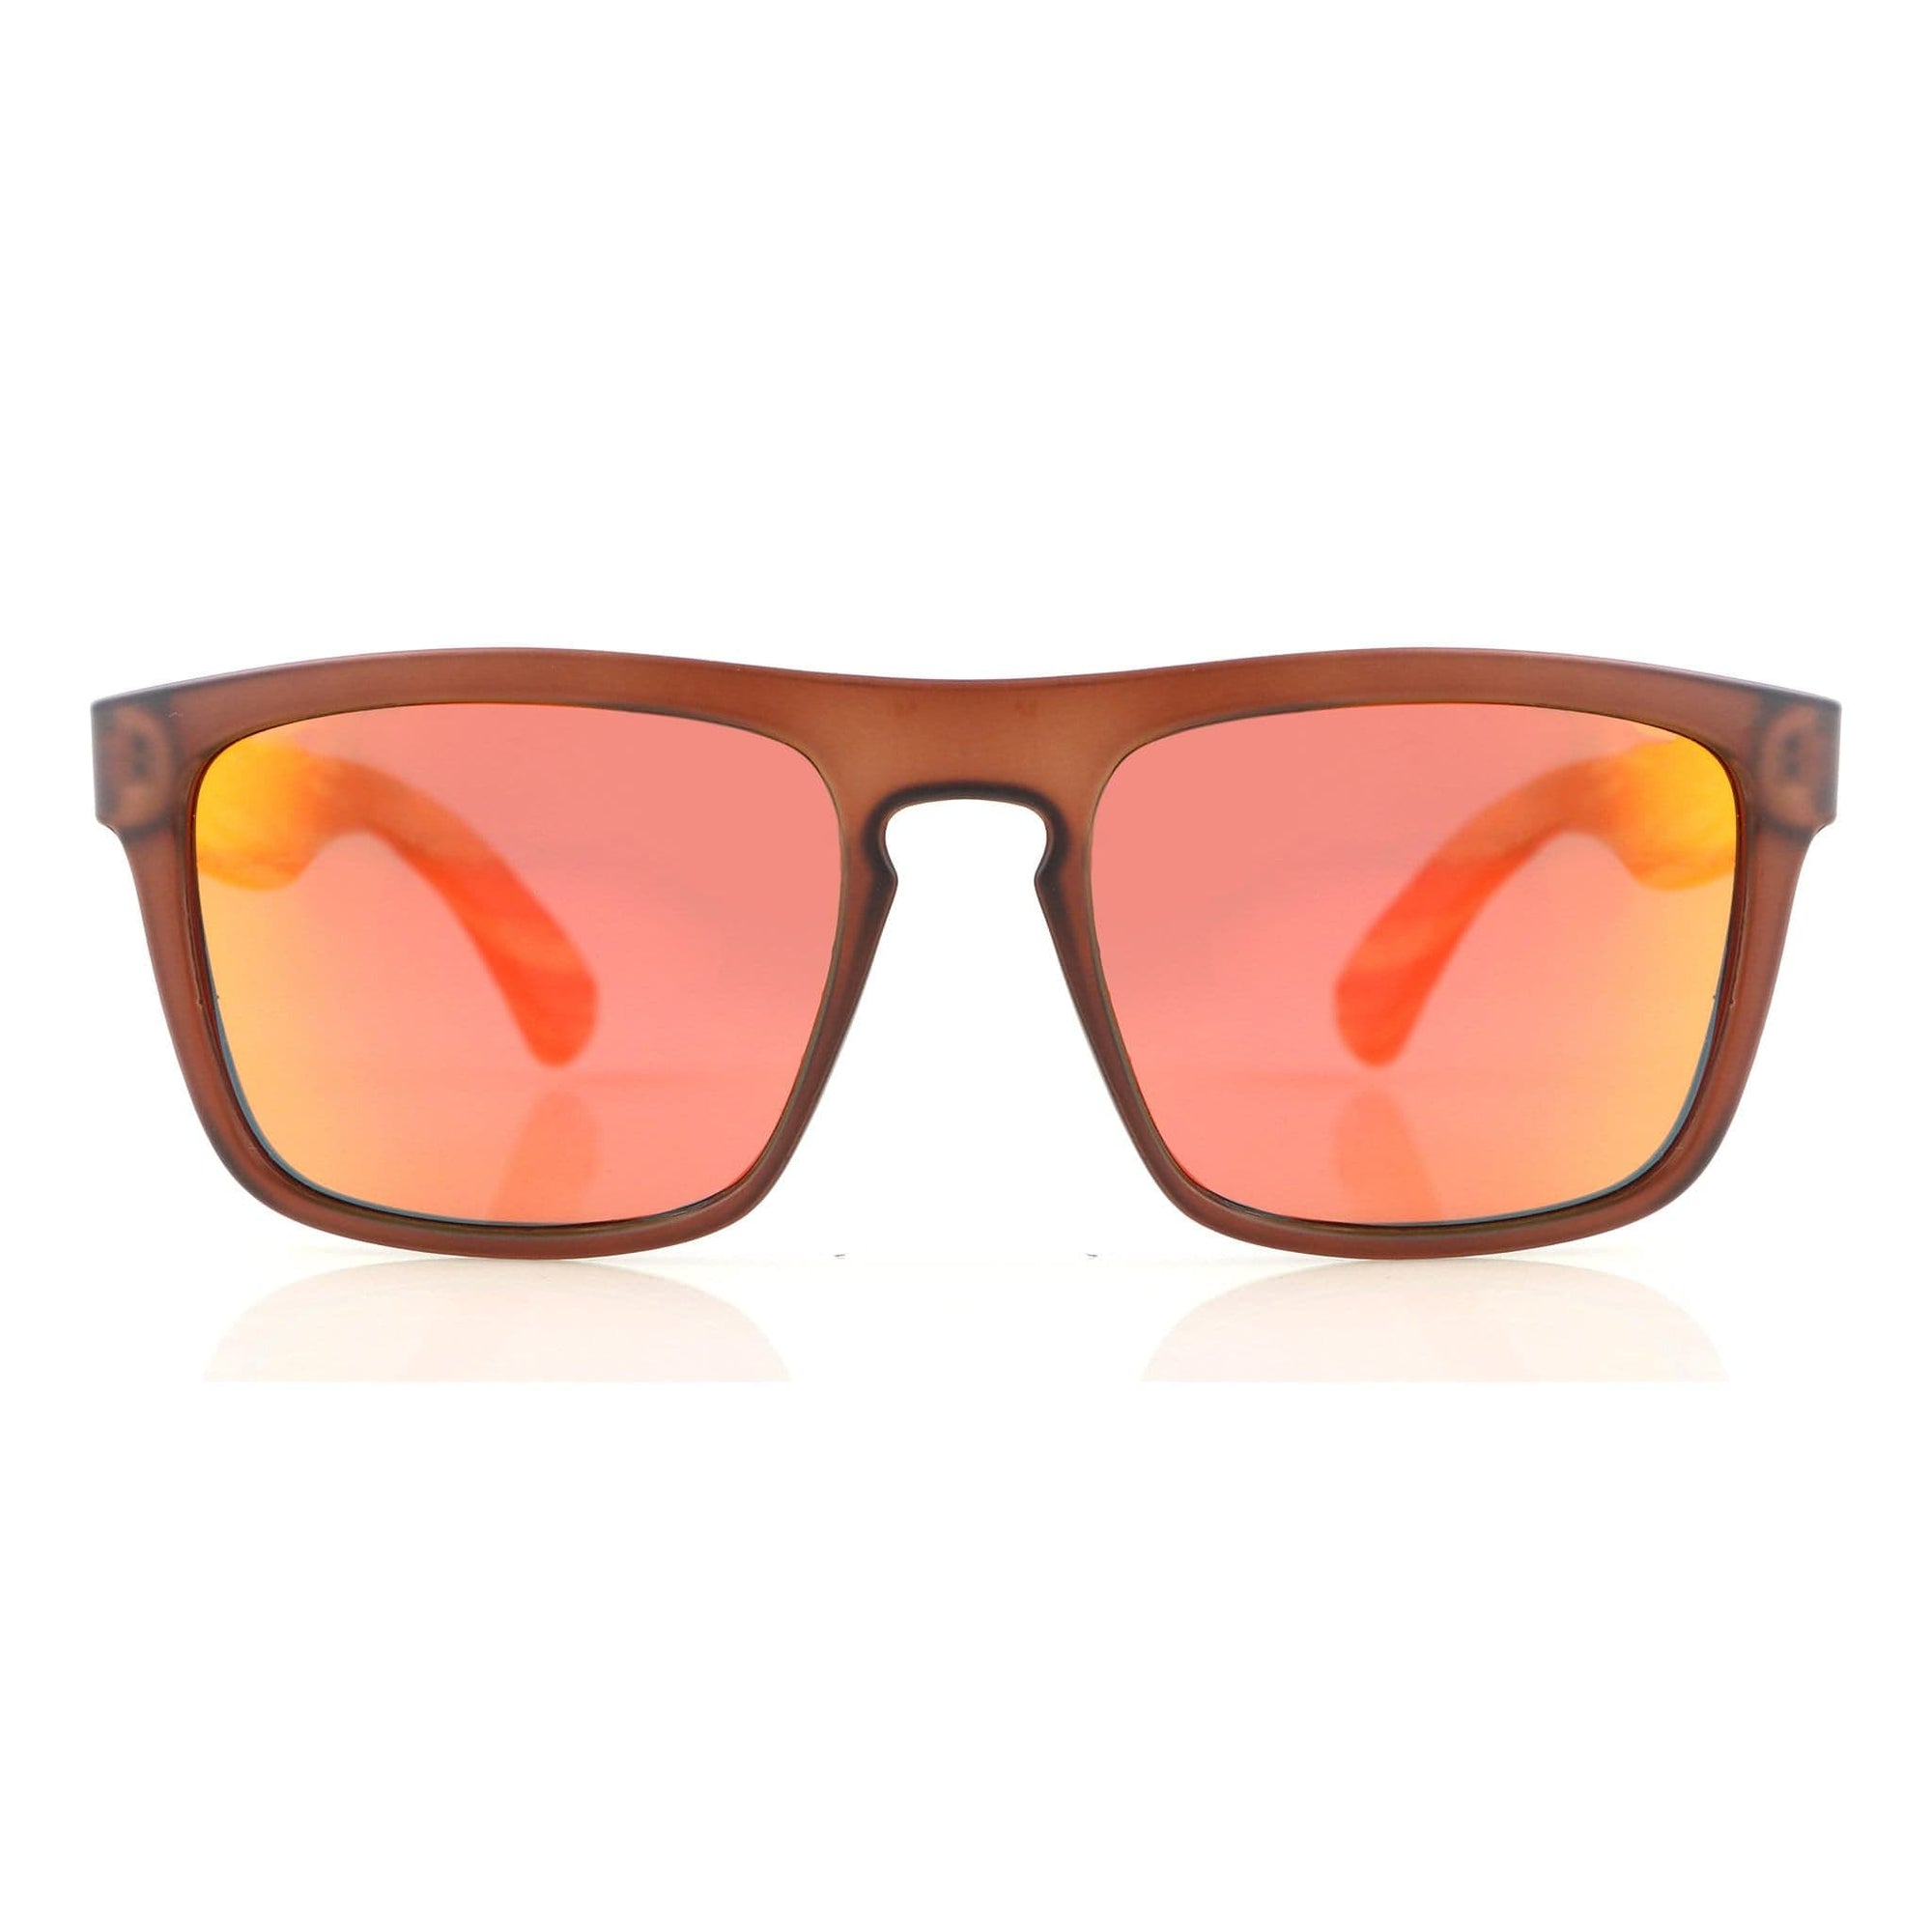 Joycoast Wooden Sunglasses Flash | Zebra Wood